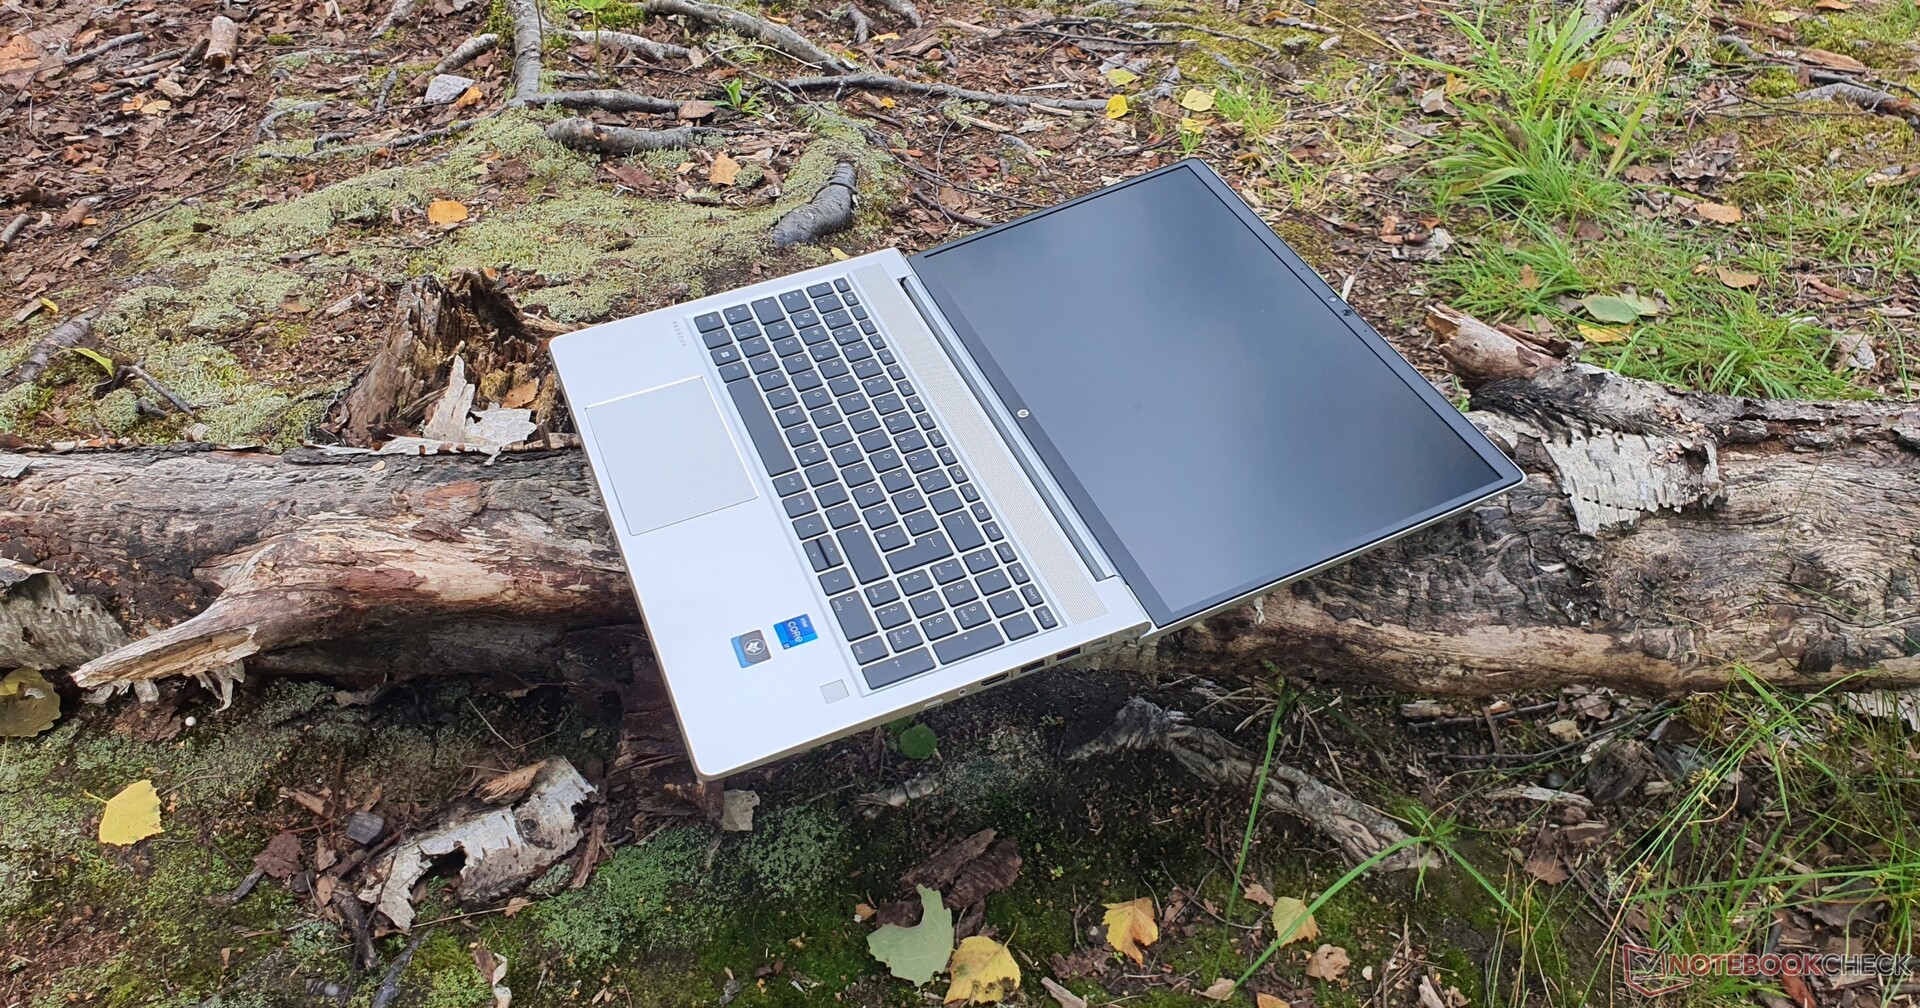 The HP ProBook 450 G9 External Hardware review 